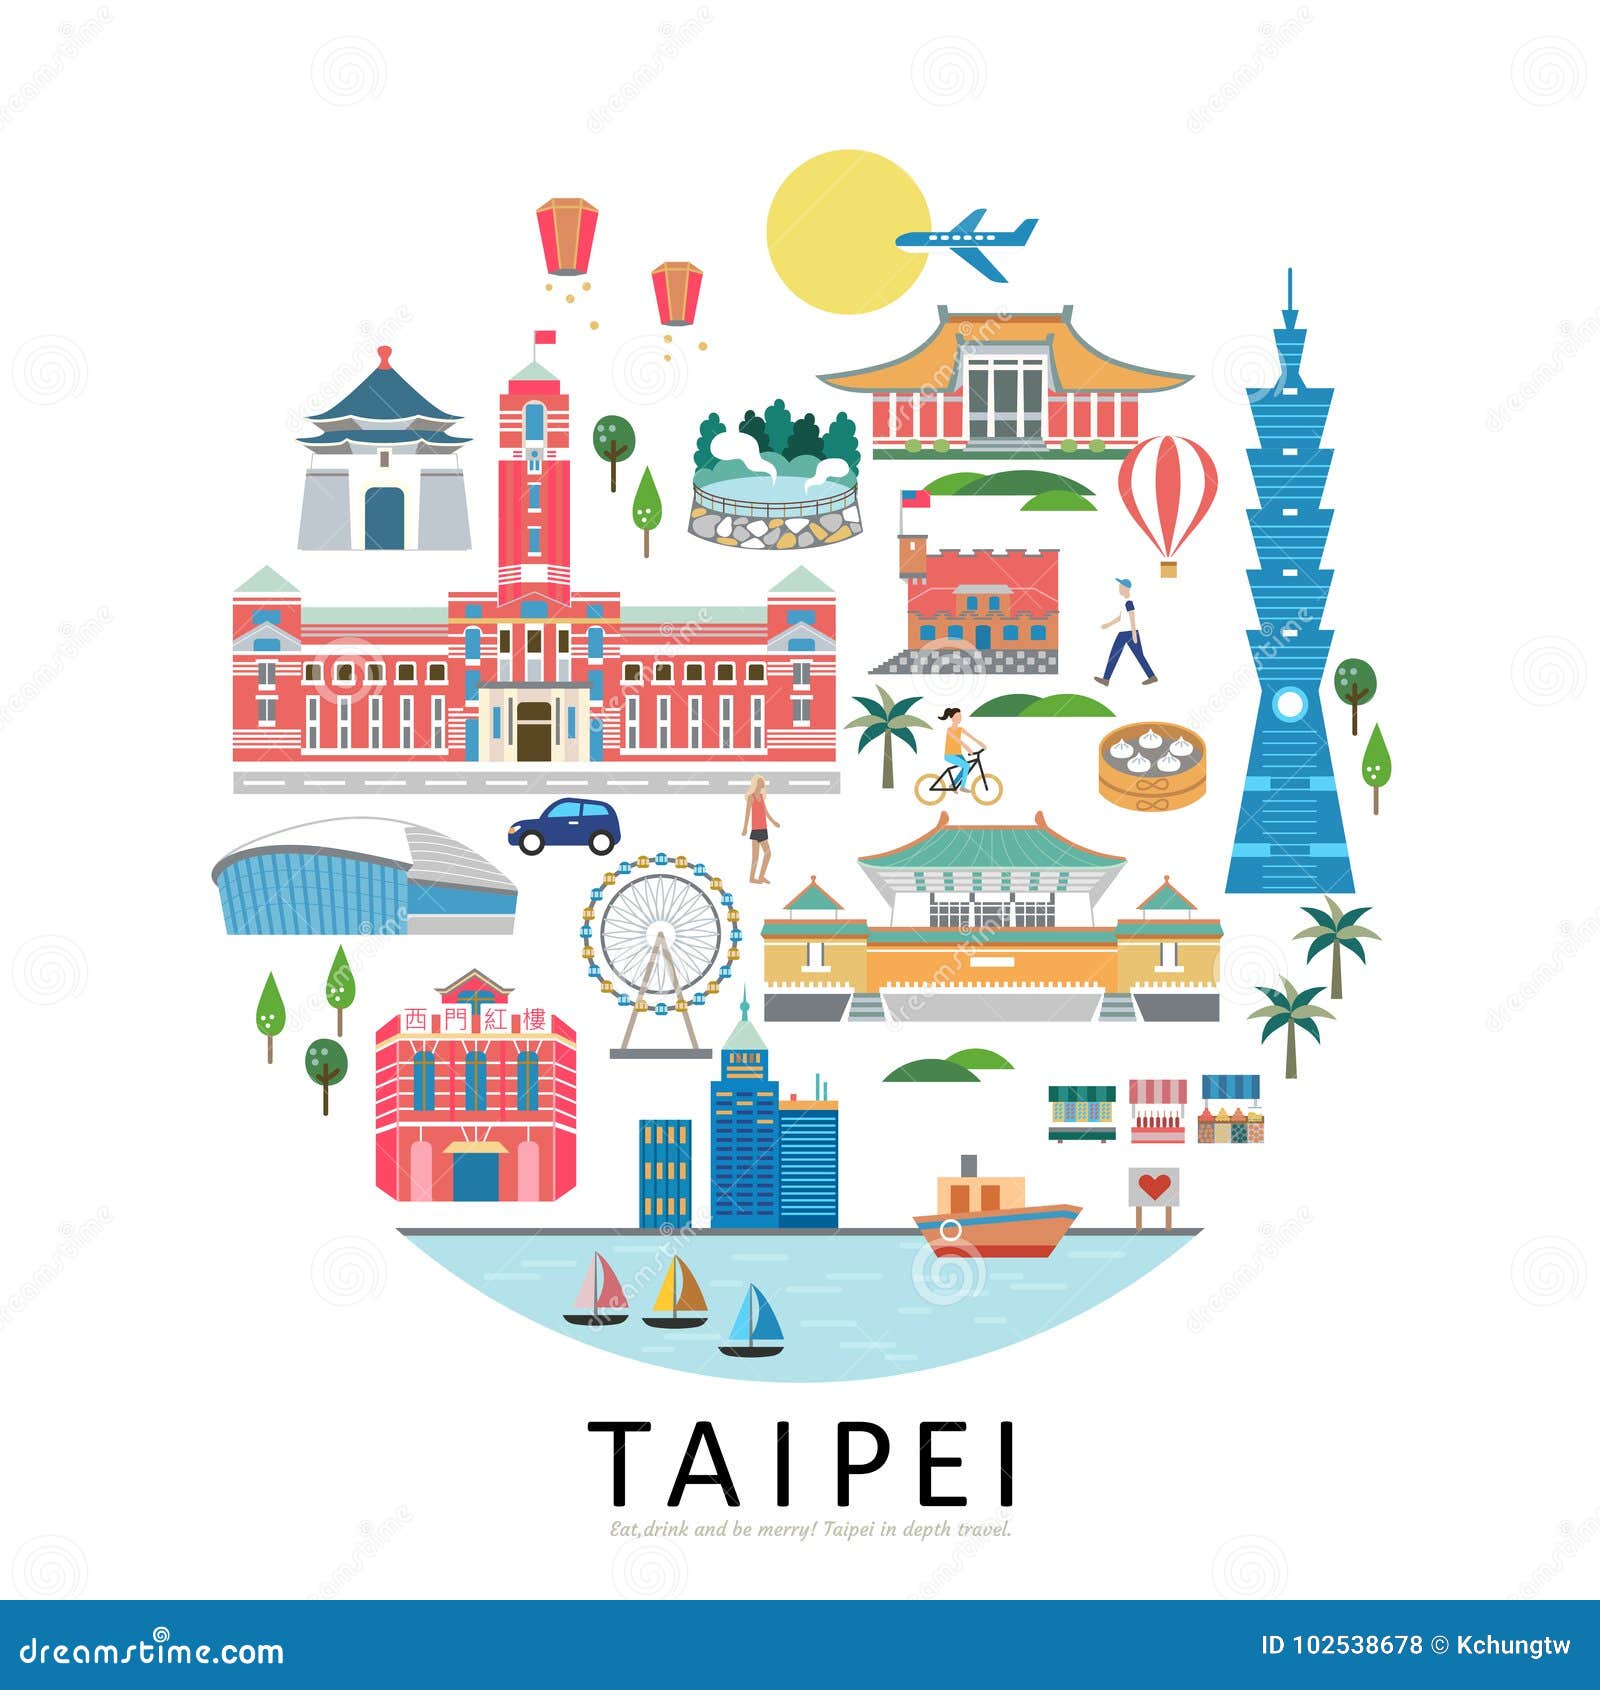 taipei landmarks collection